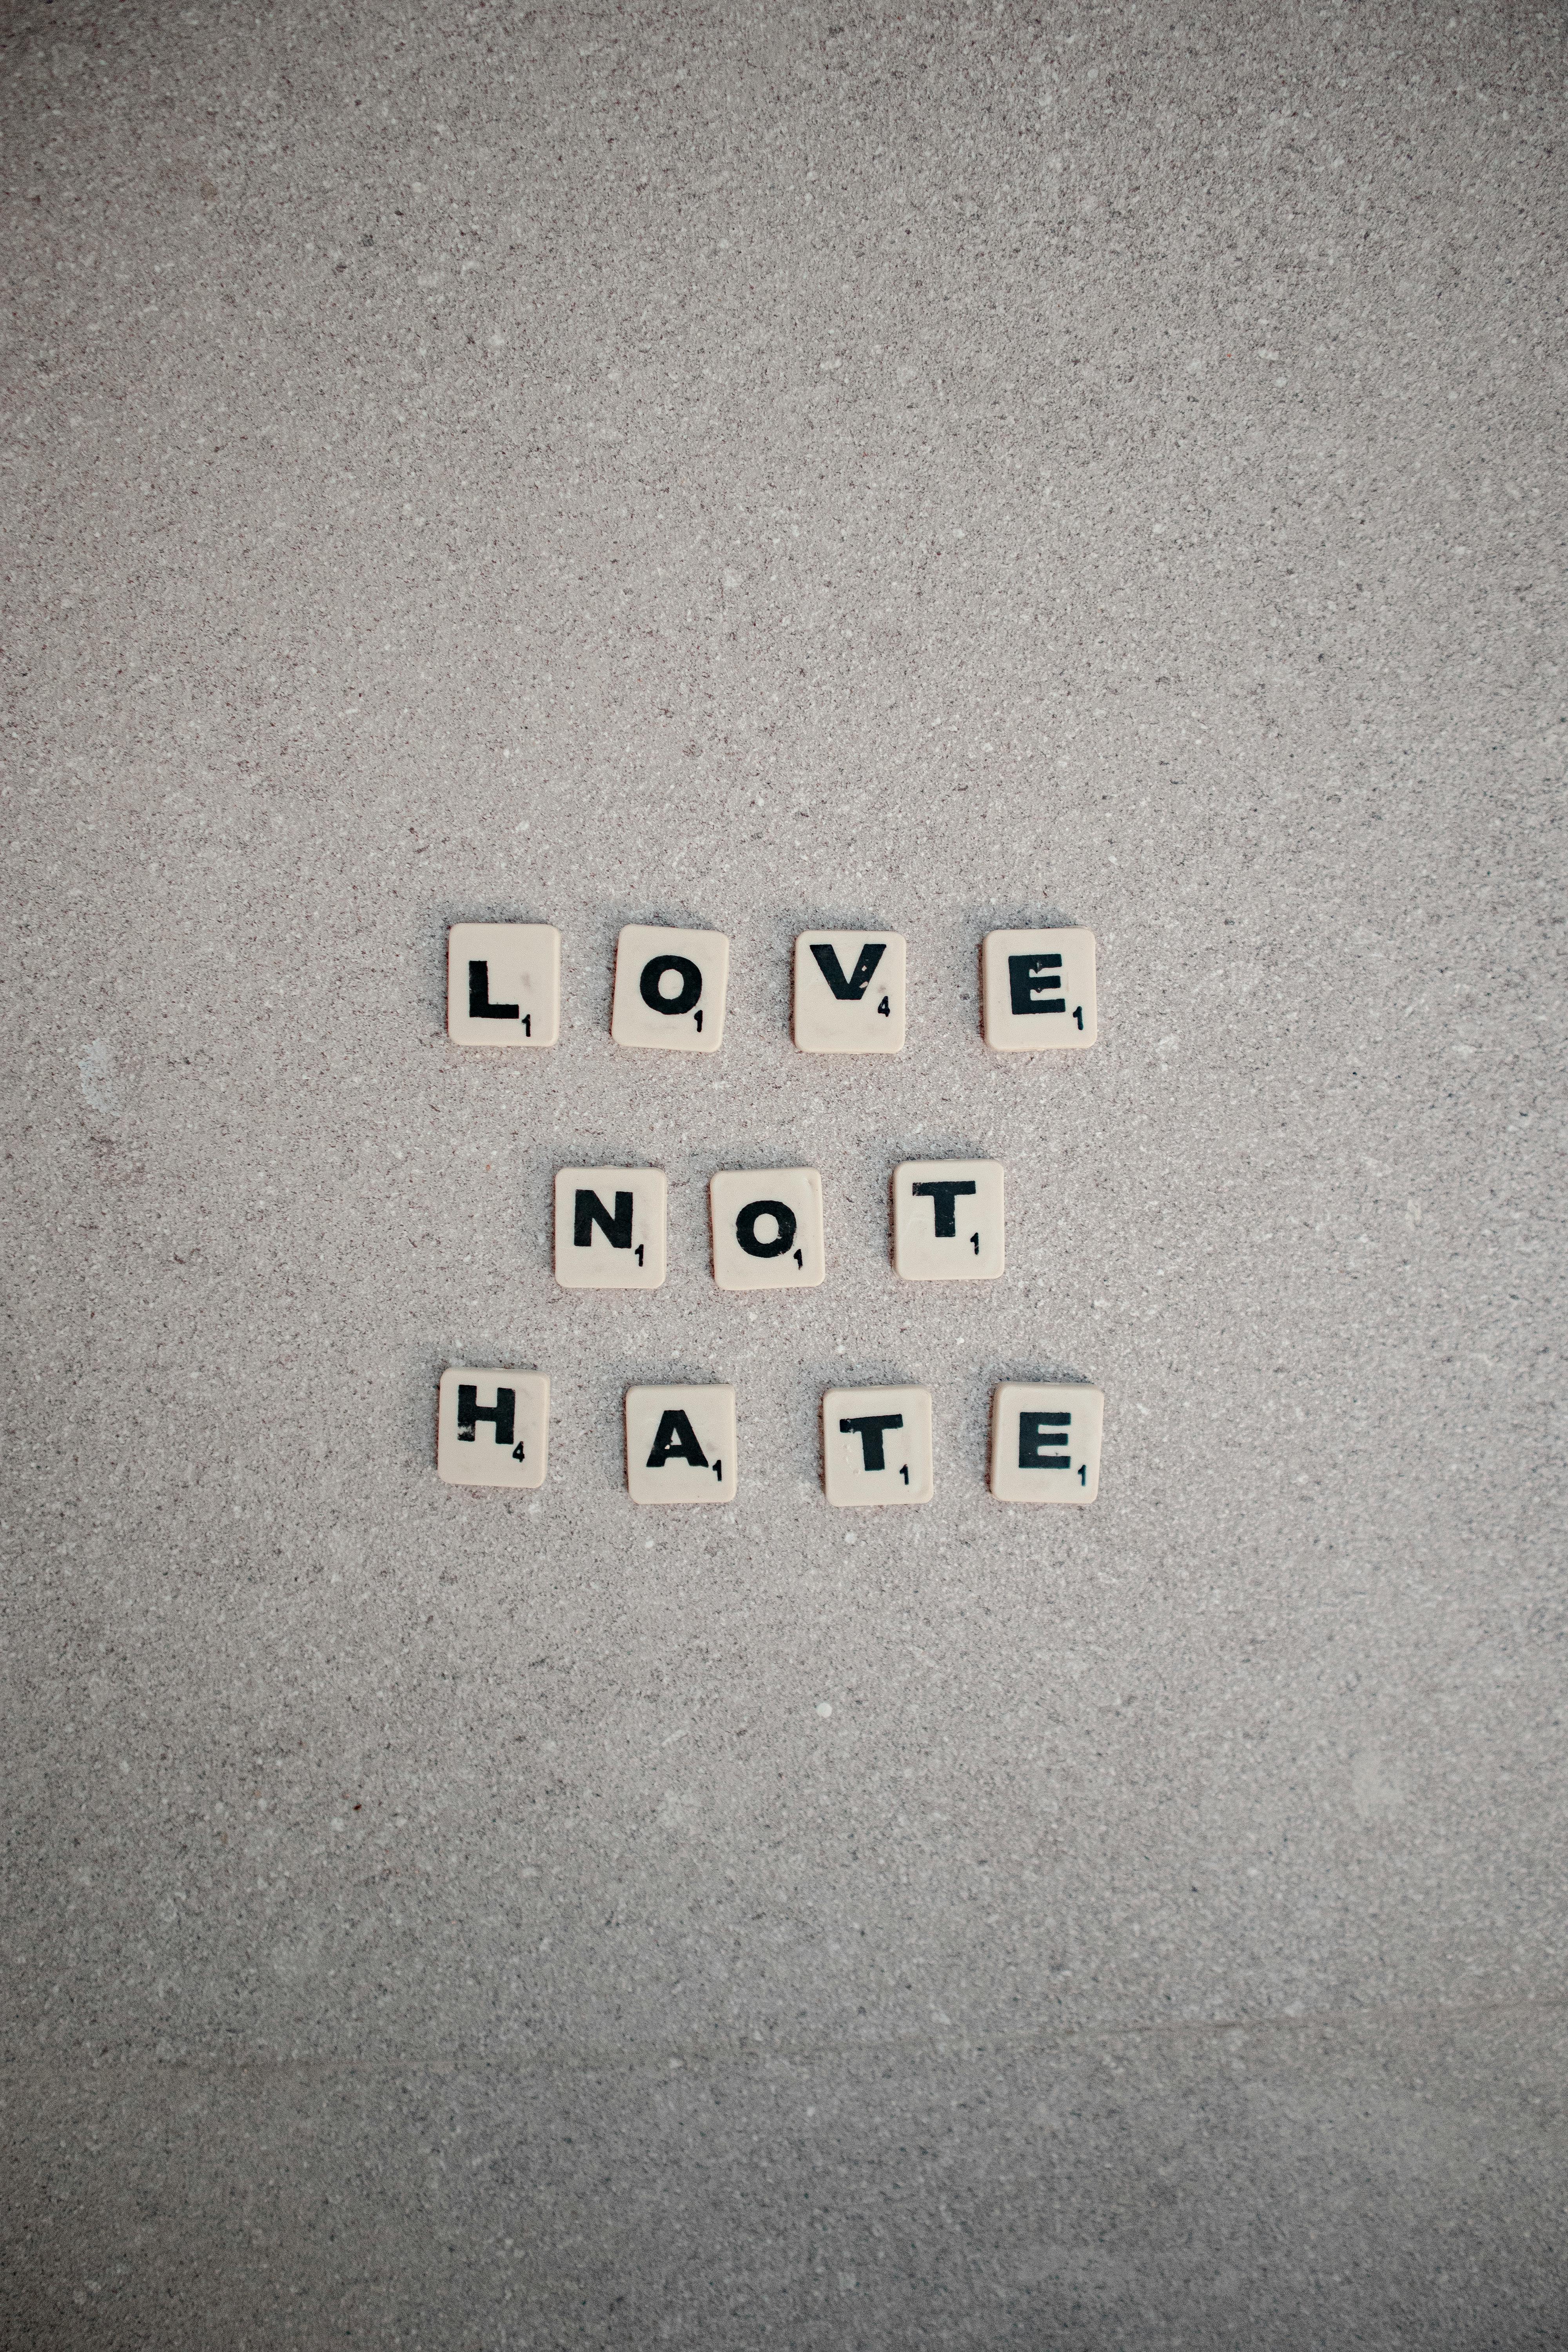 Scrabble Tiles Spelling Love Not Hate Free Stock Photo